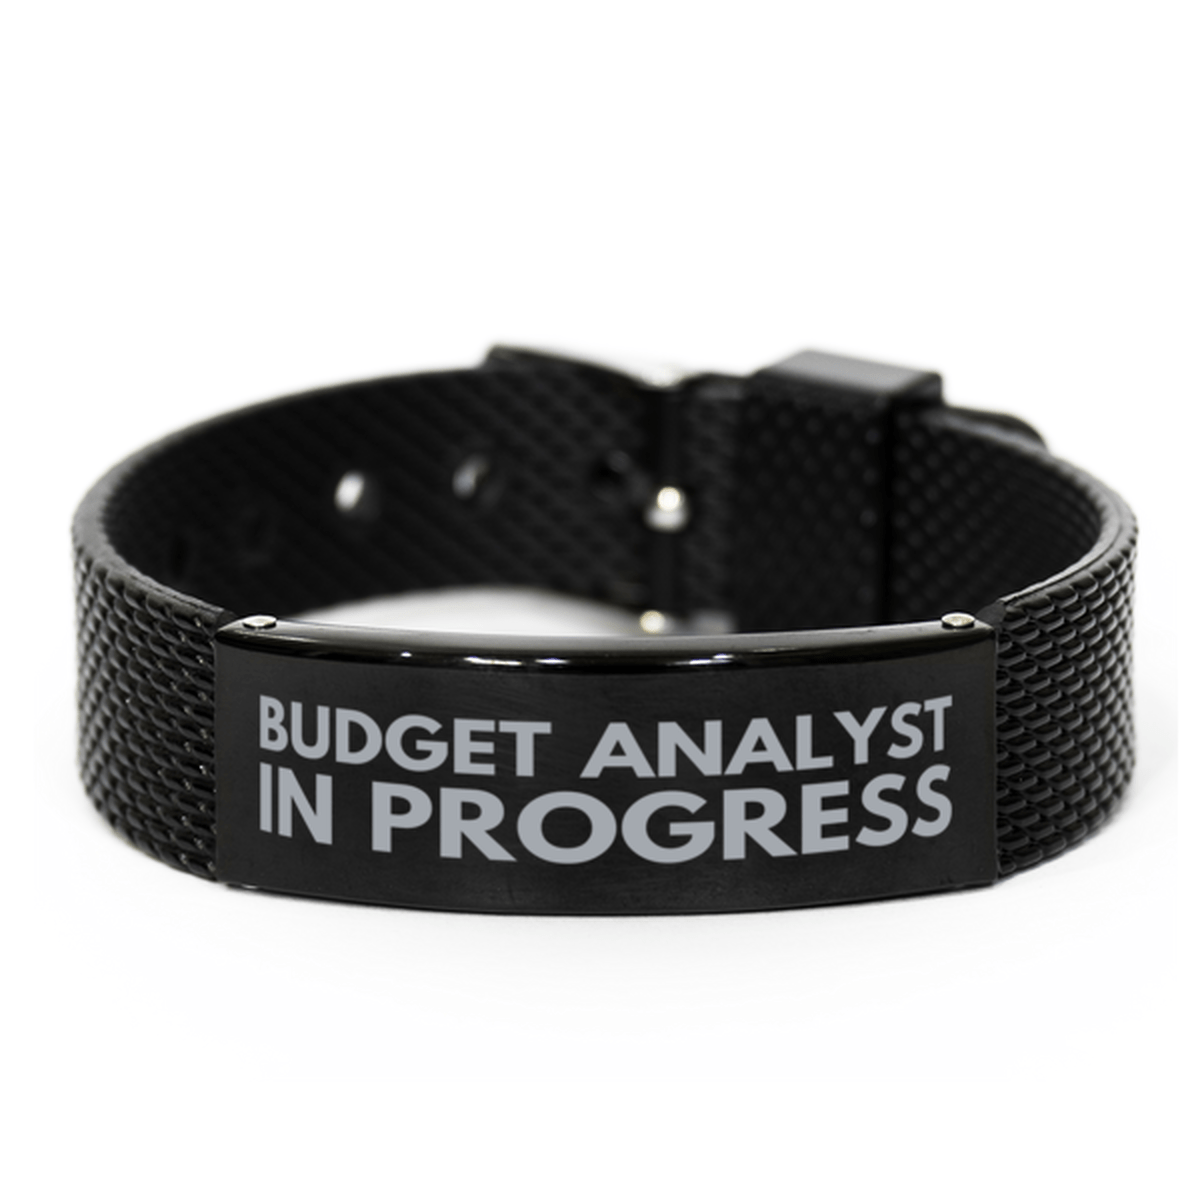 Inspirational Budget Analyst Black Shark Mesh Bracelet, Budget Analyst In Progress, Best Graduation Gifts for Students